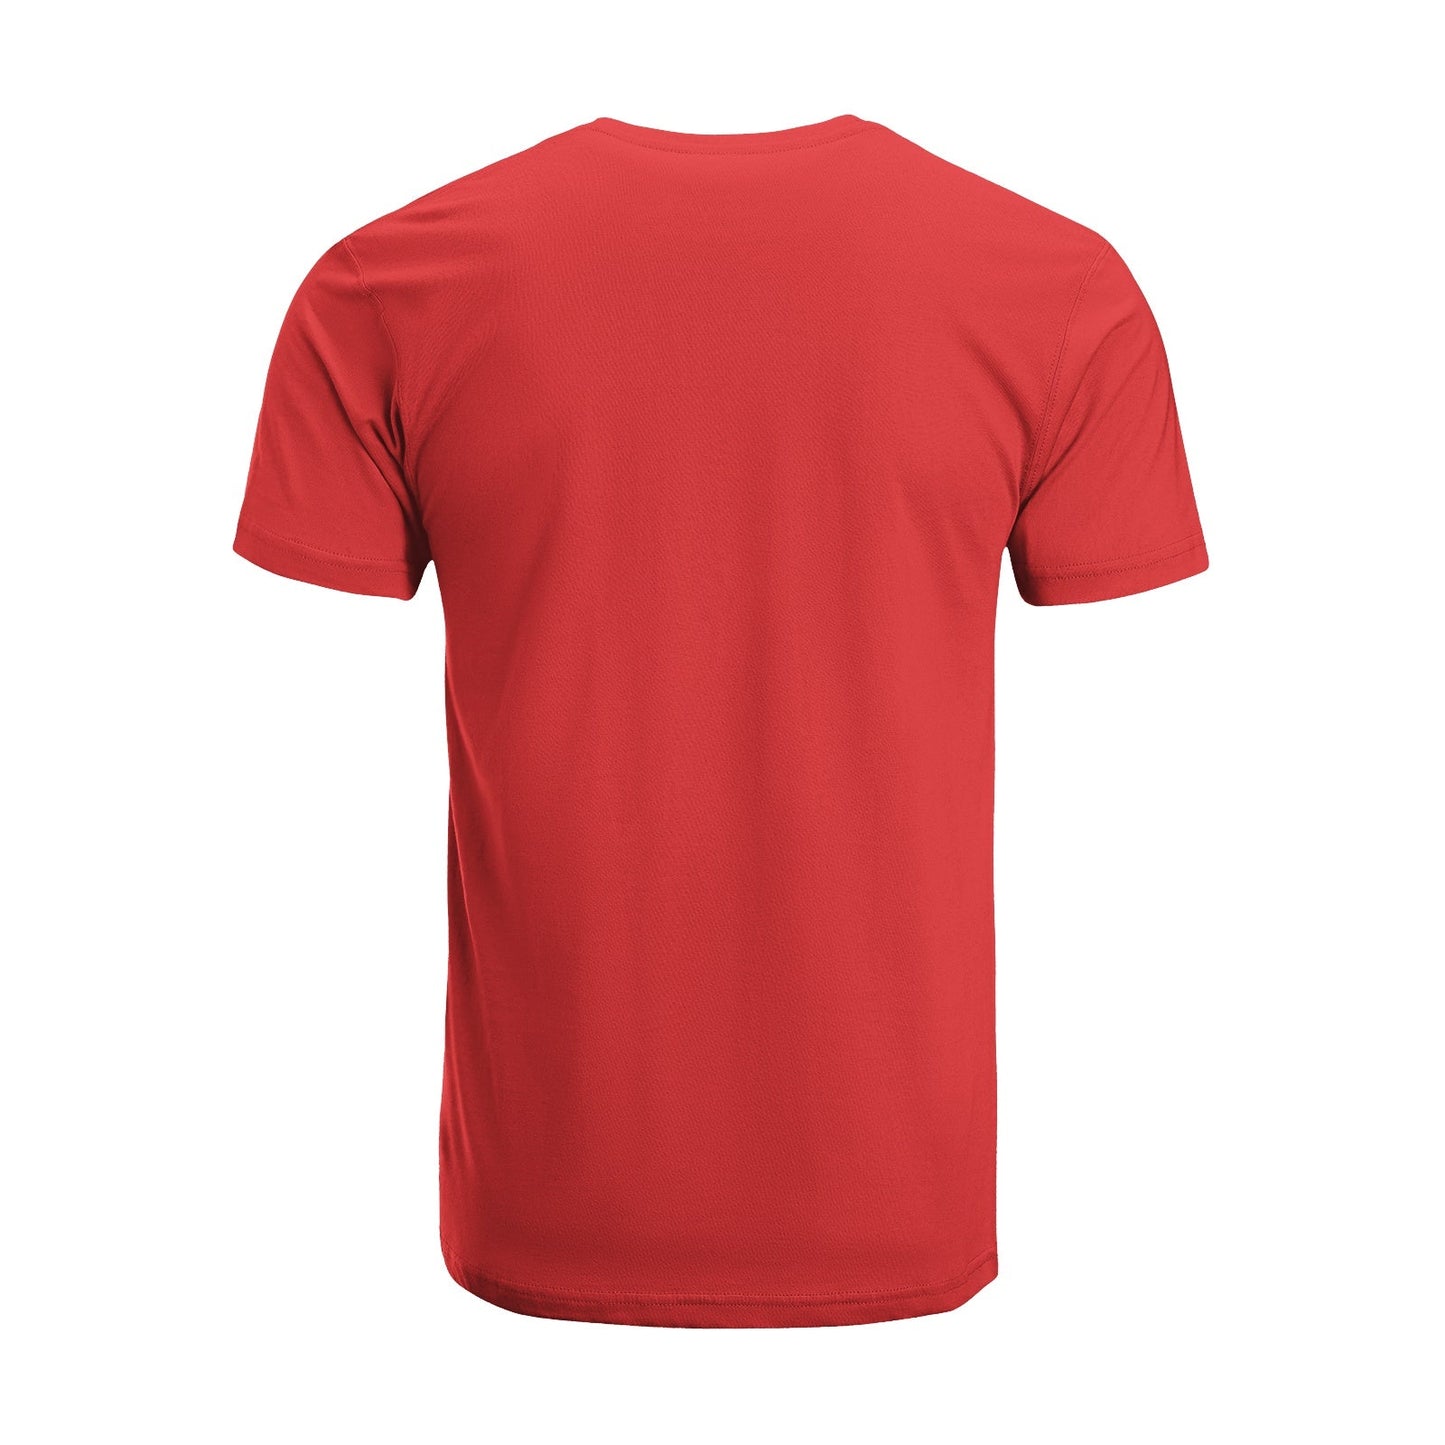 Unisex Short Sleeve Crew Neck Cotton Jersey T-Shirt MOM 11